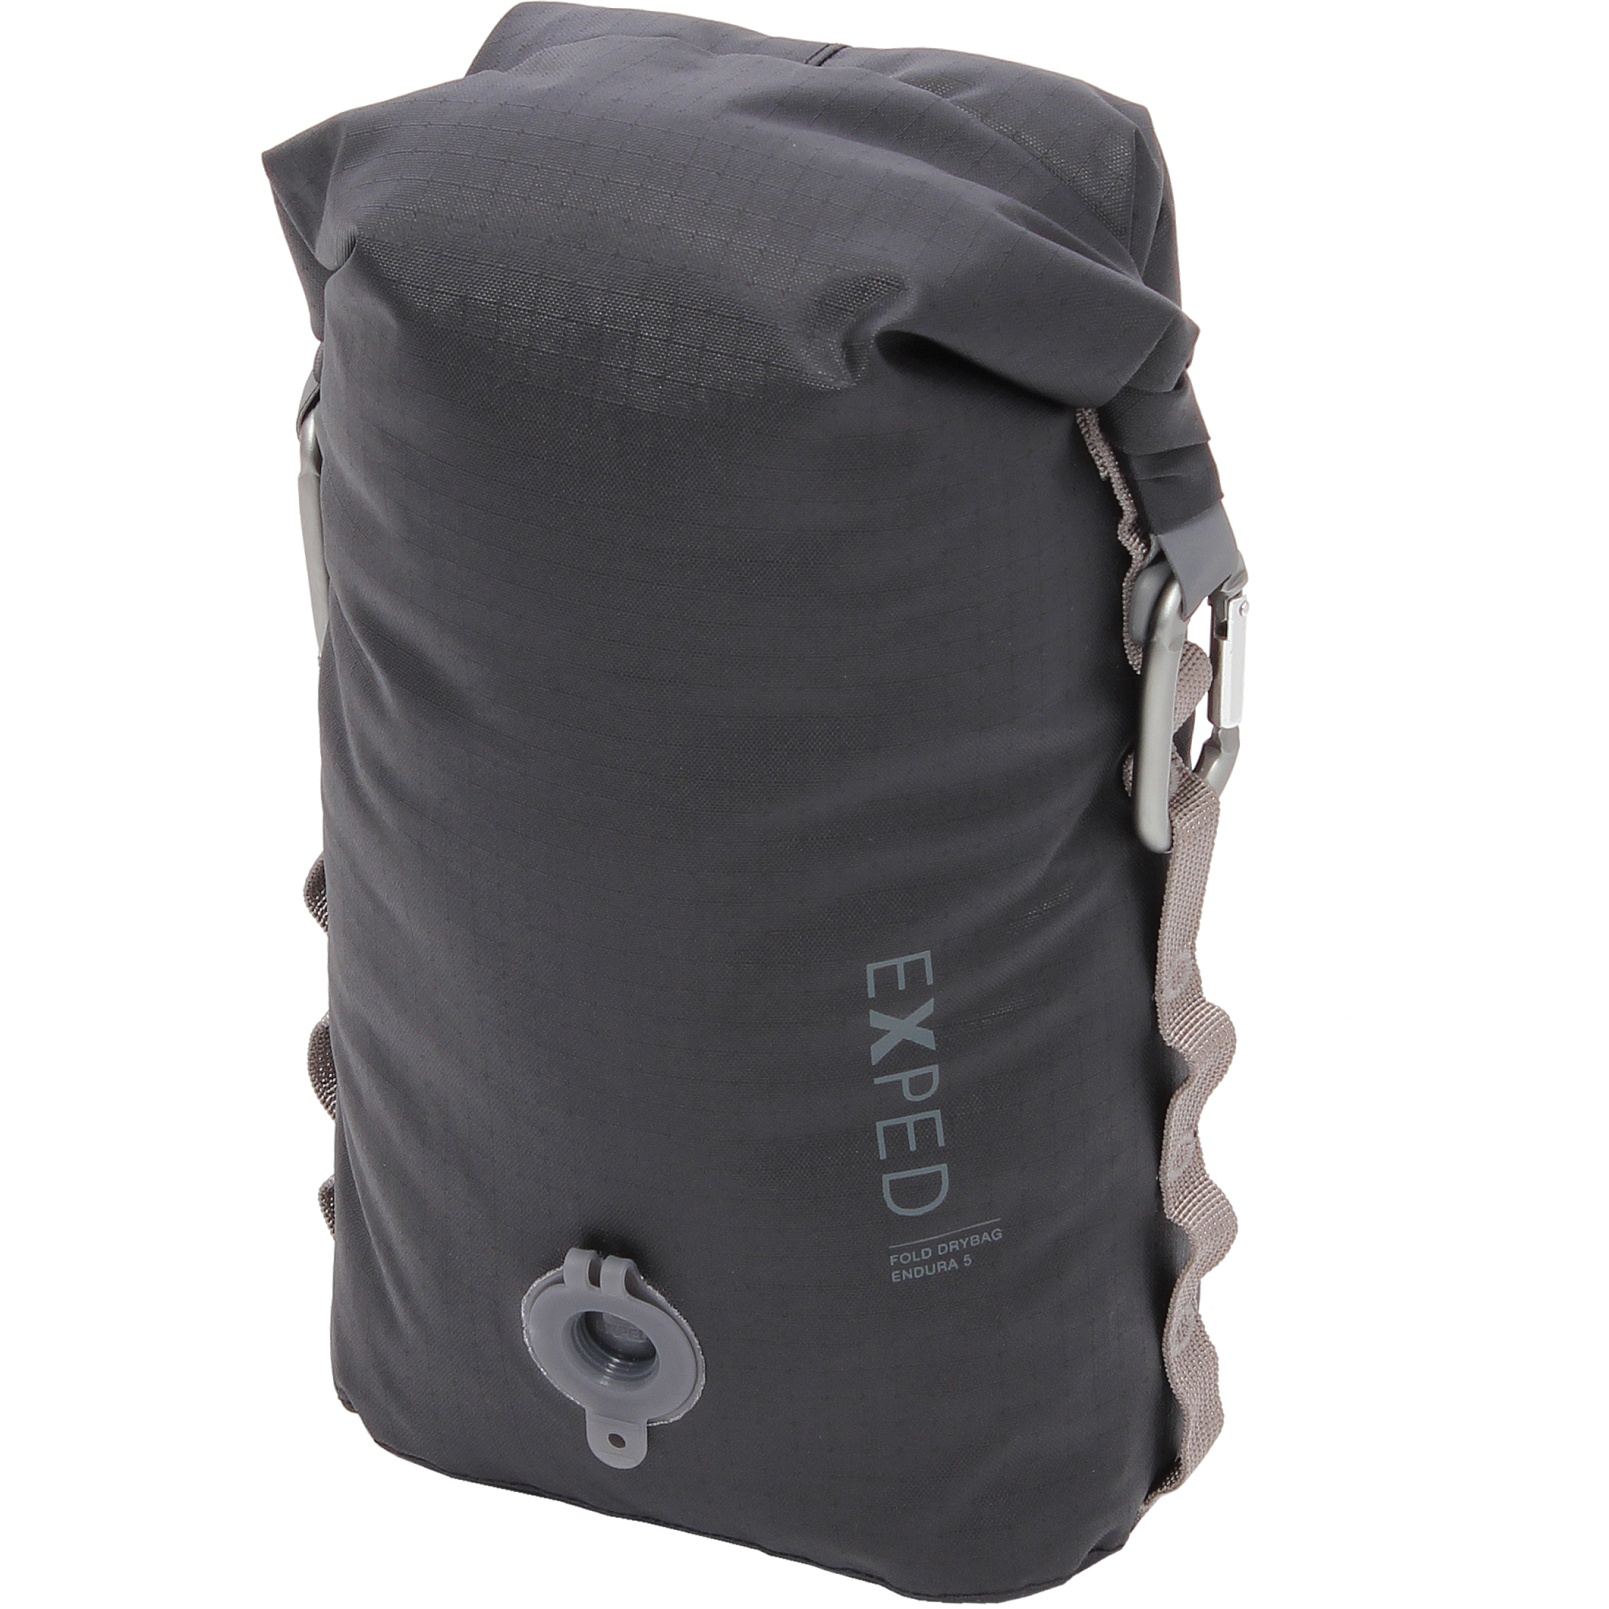 Productfoto van Exped Fold Drybag Endura - 5L - black